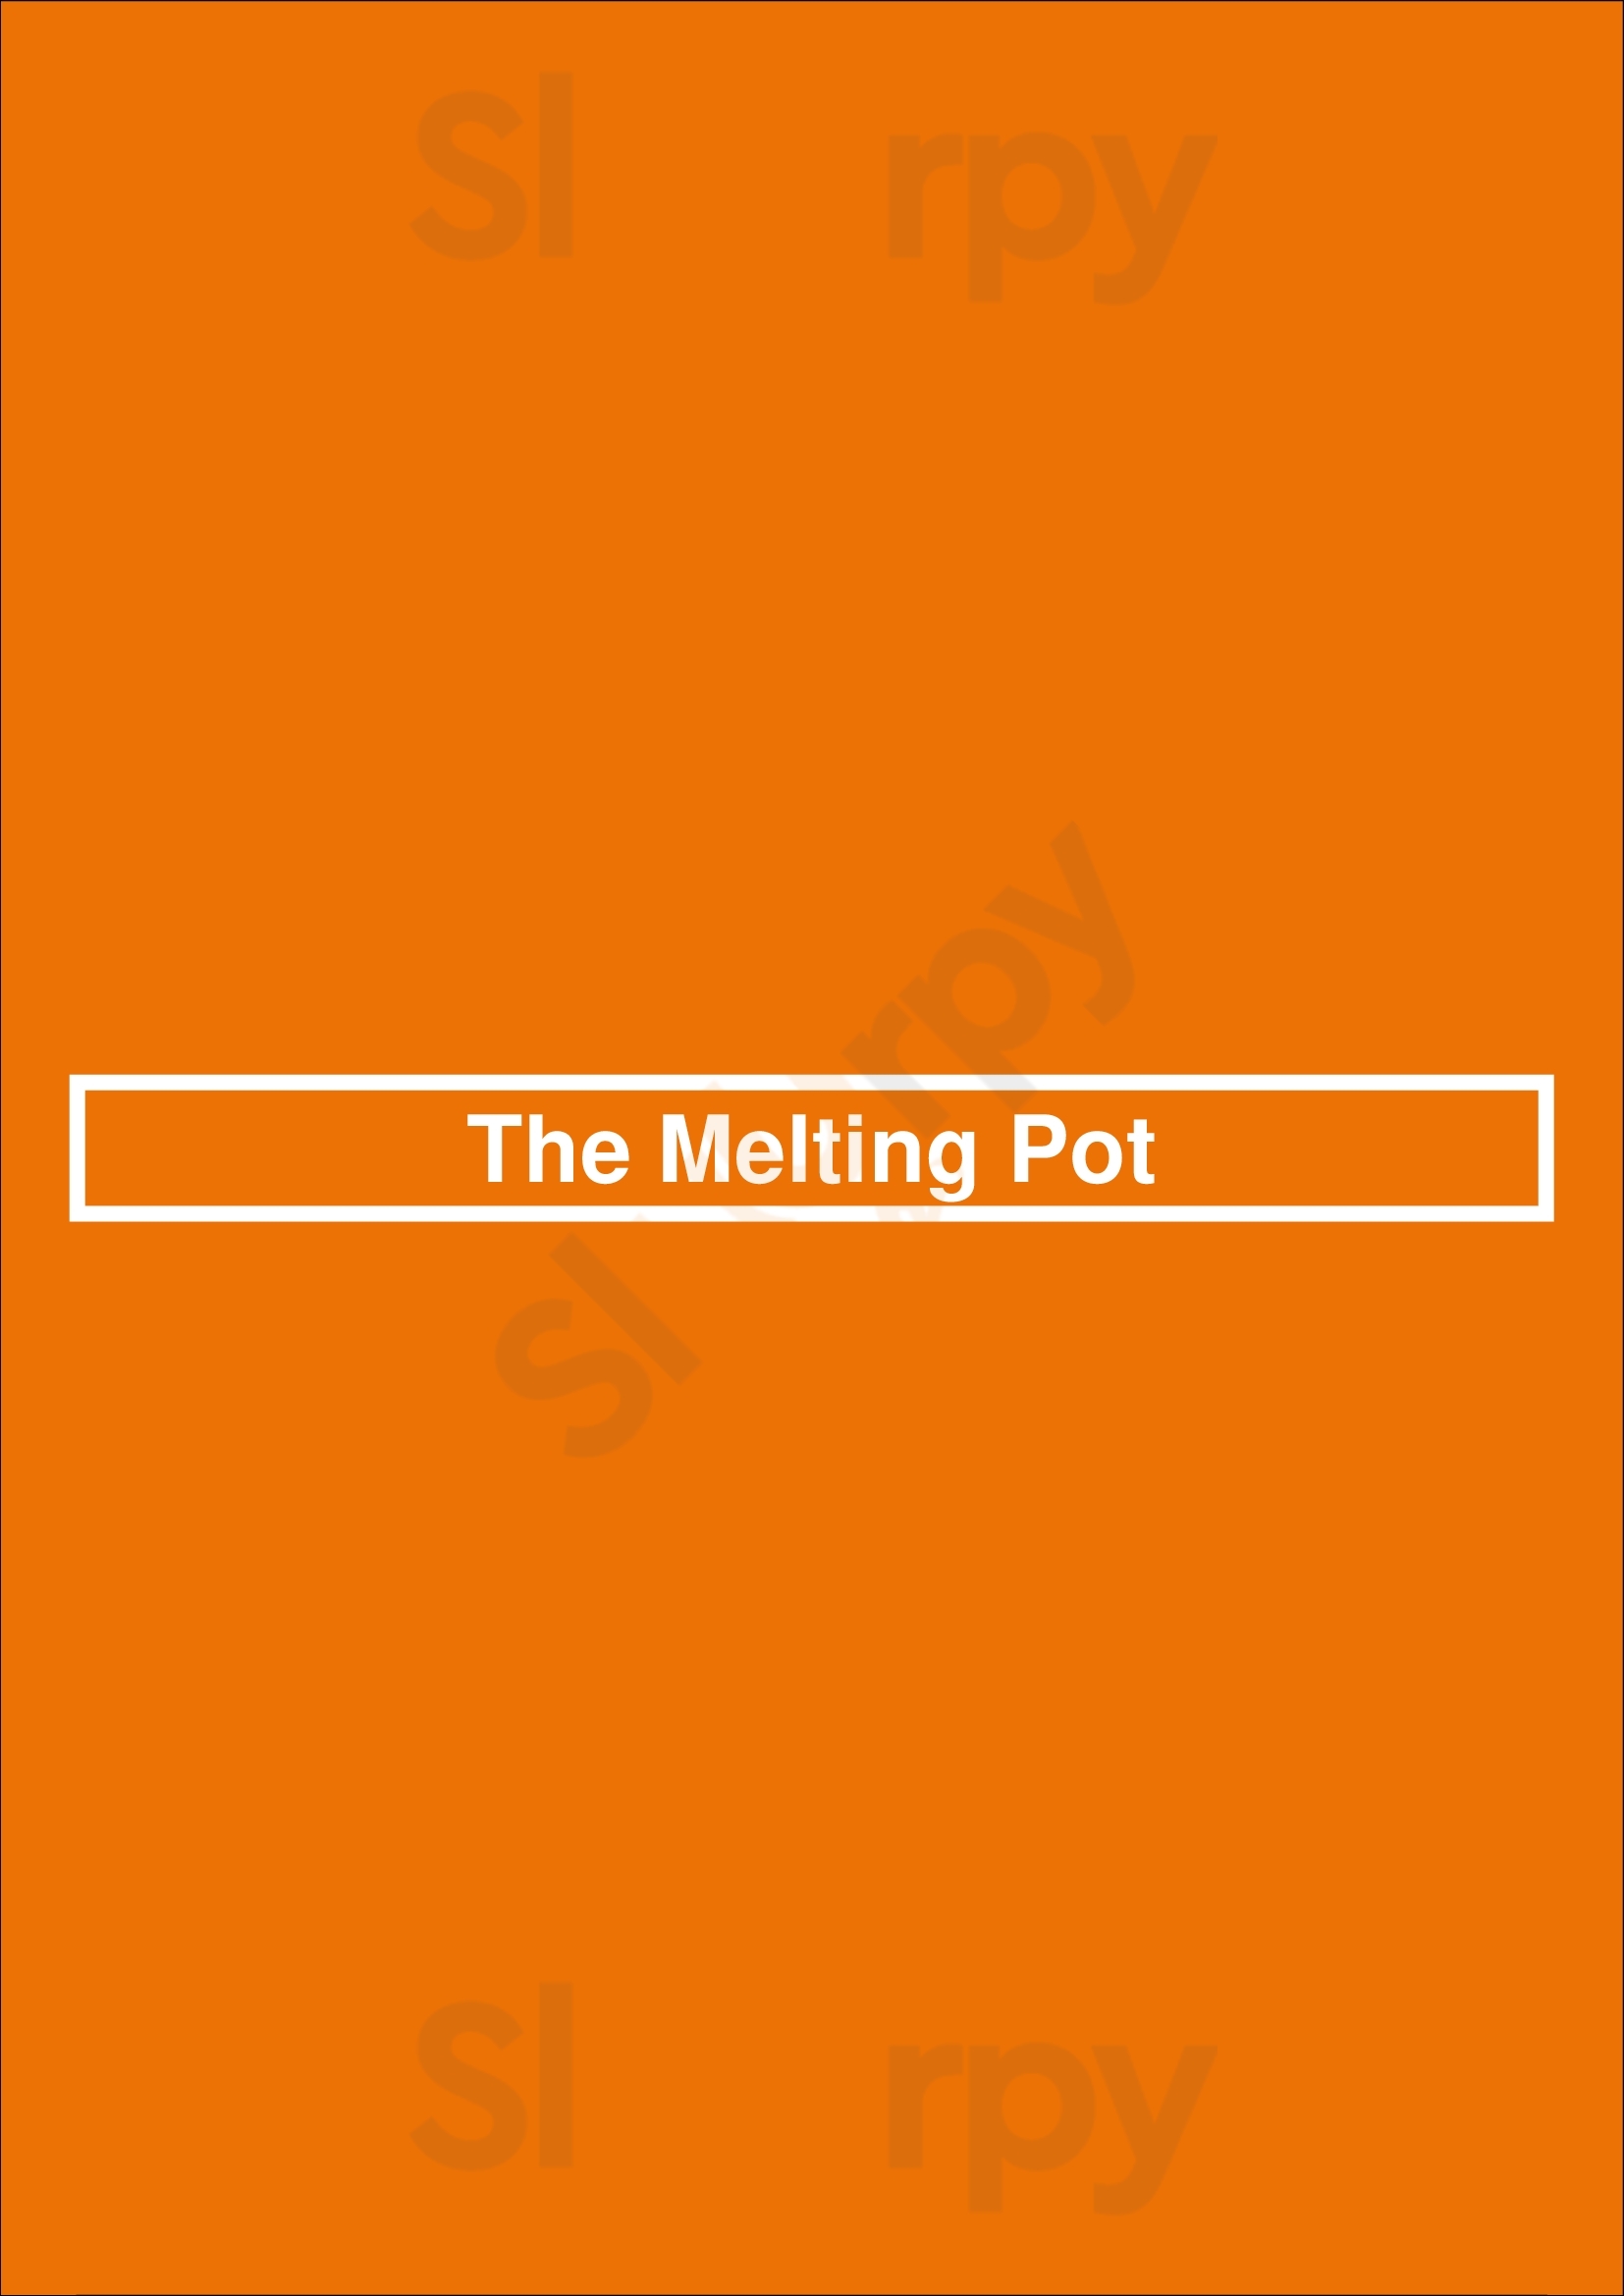 The Melting Pot Knoxville Menu - 1